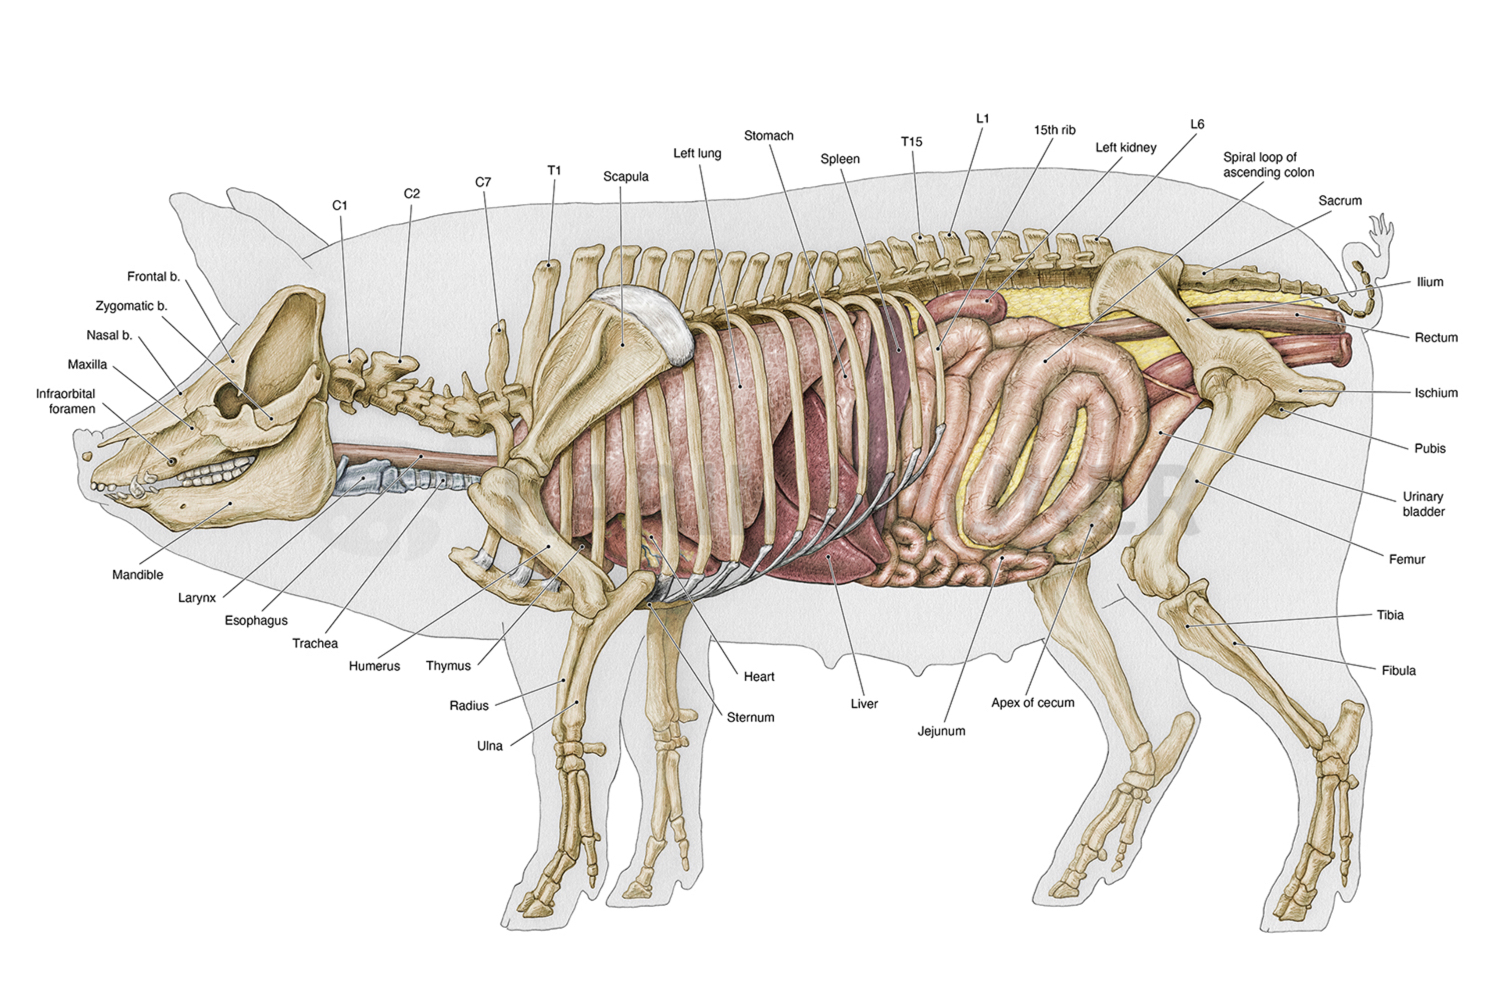 Pork skeleton with viscera